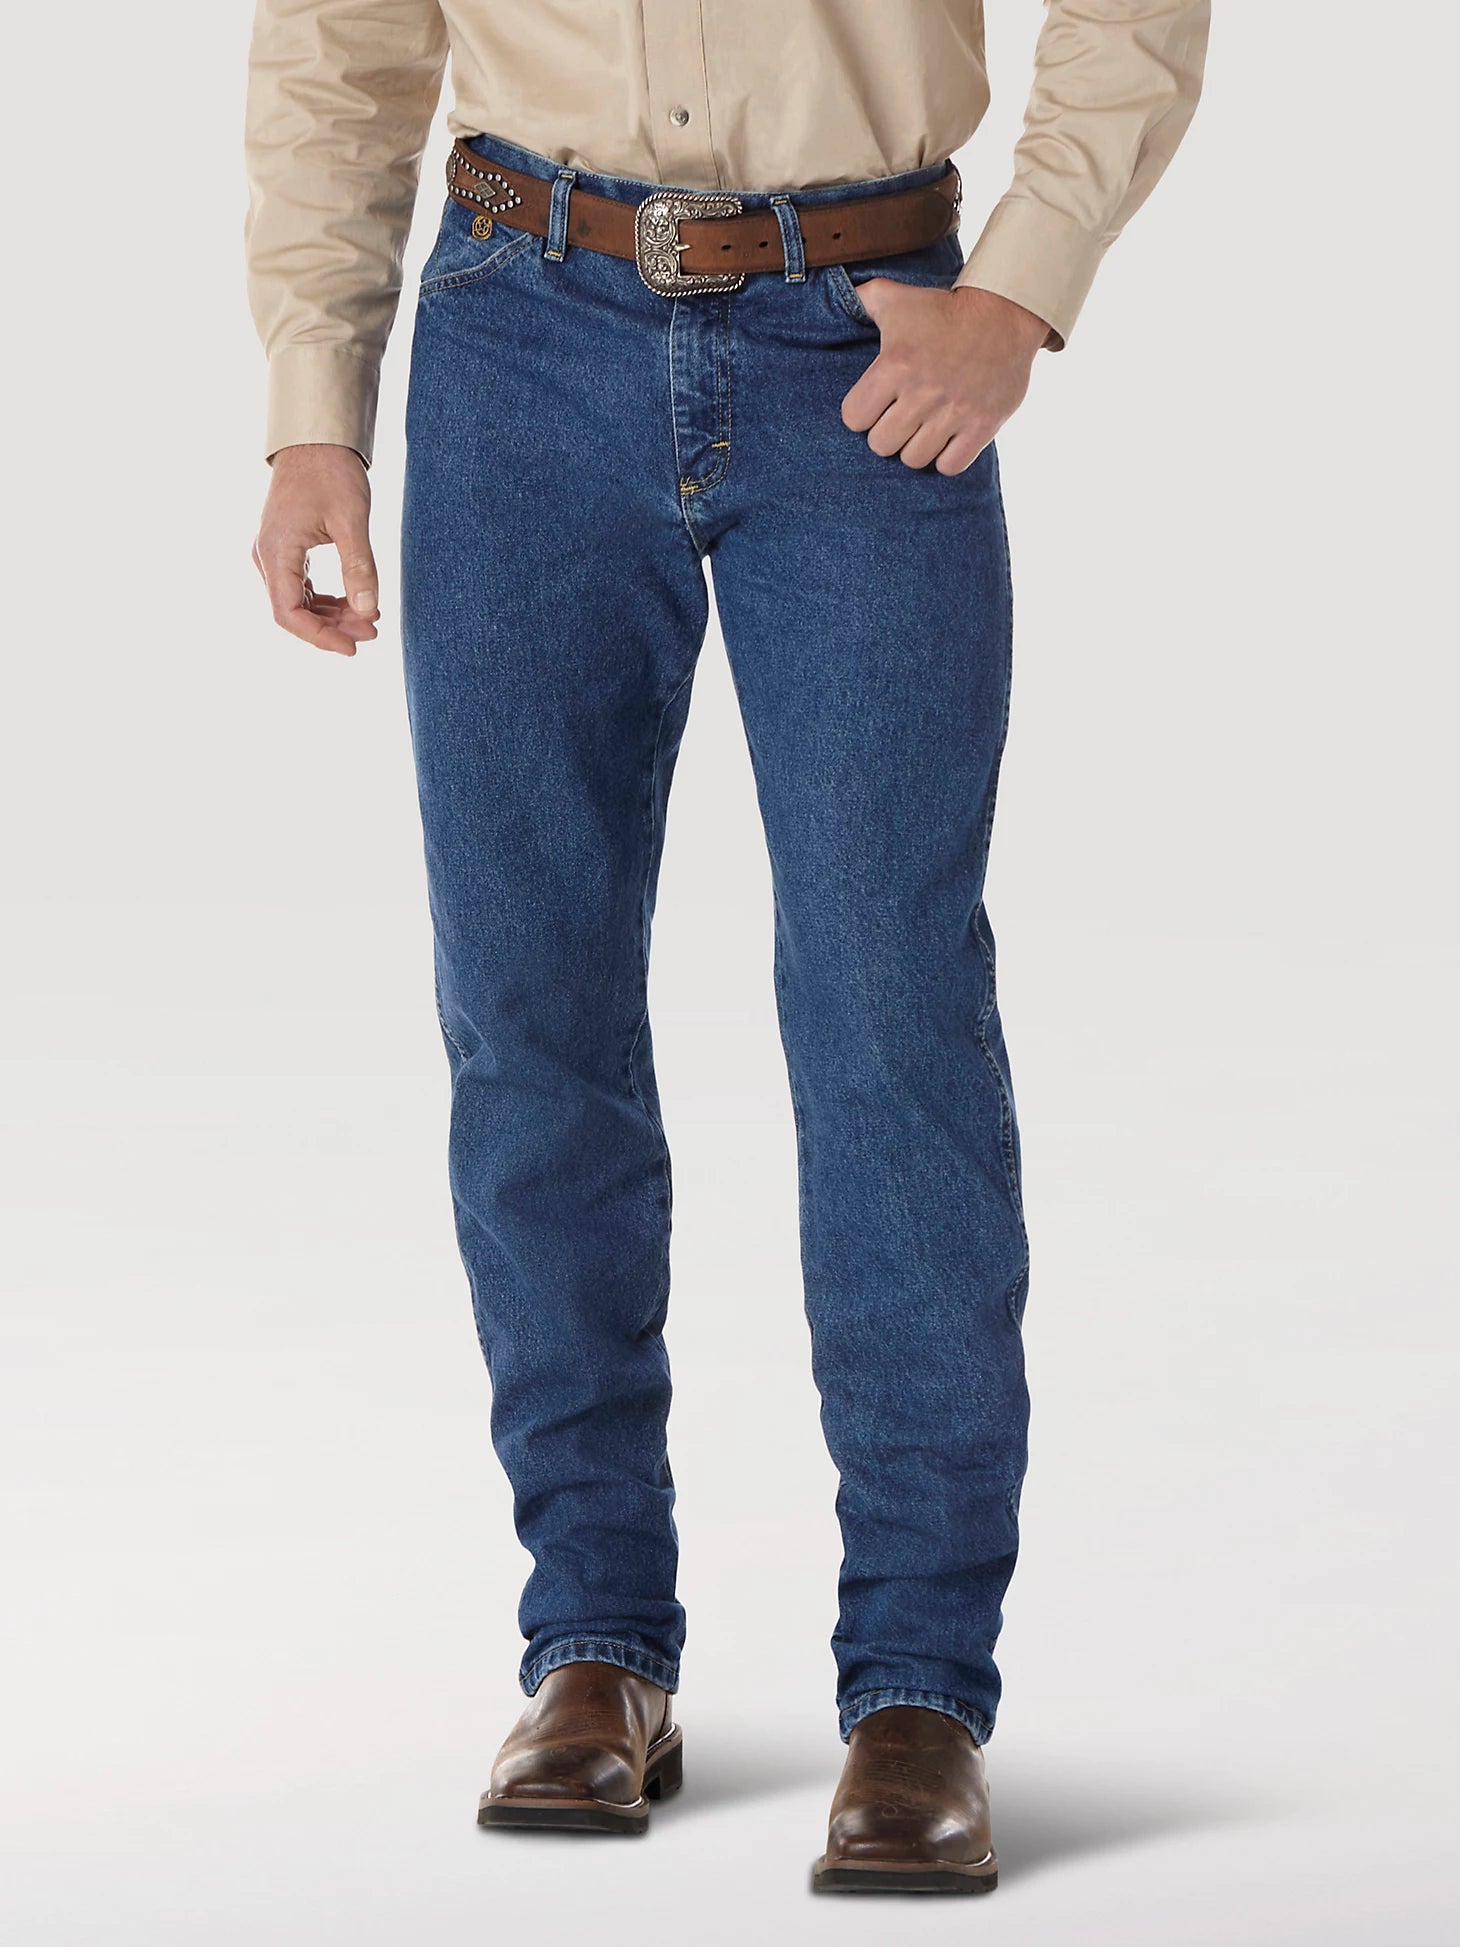 Jeans Wrangler George Strait Original Fit Heavyweight Stone Caballero